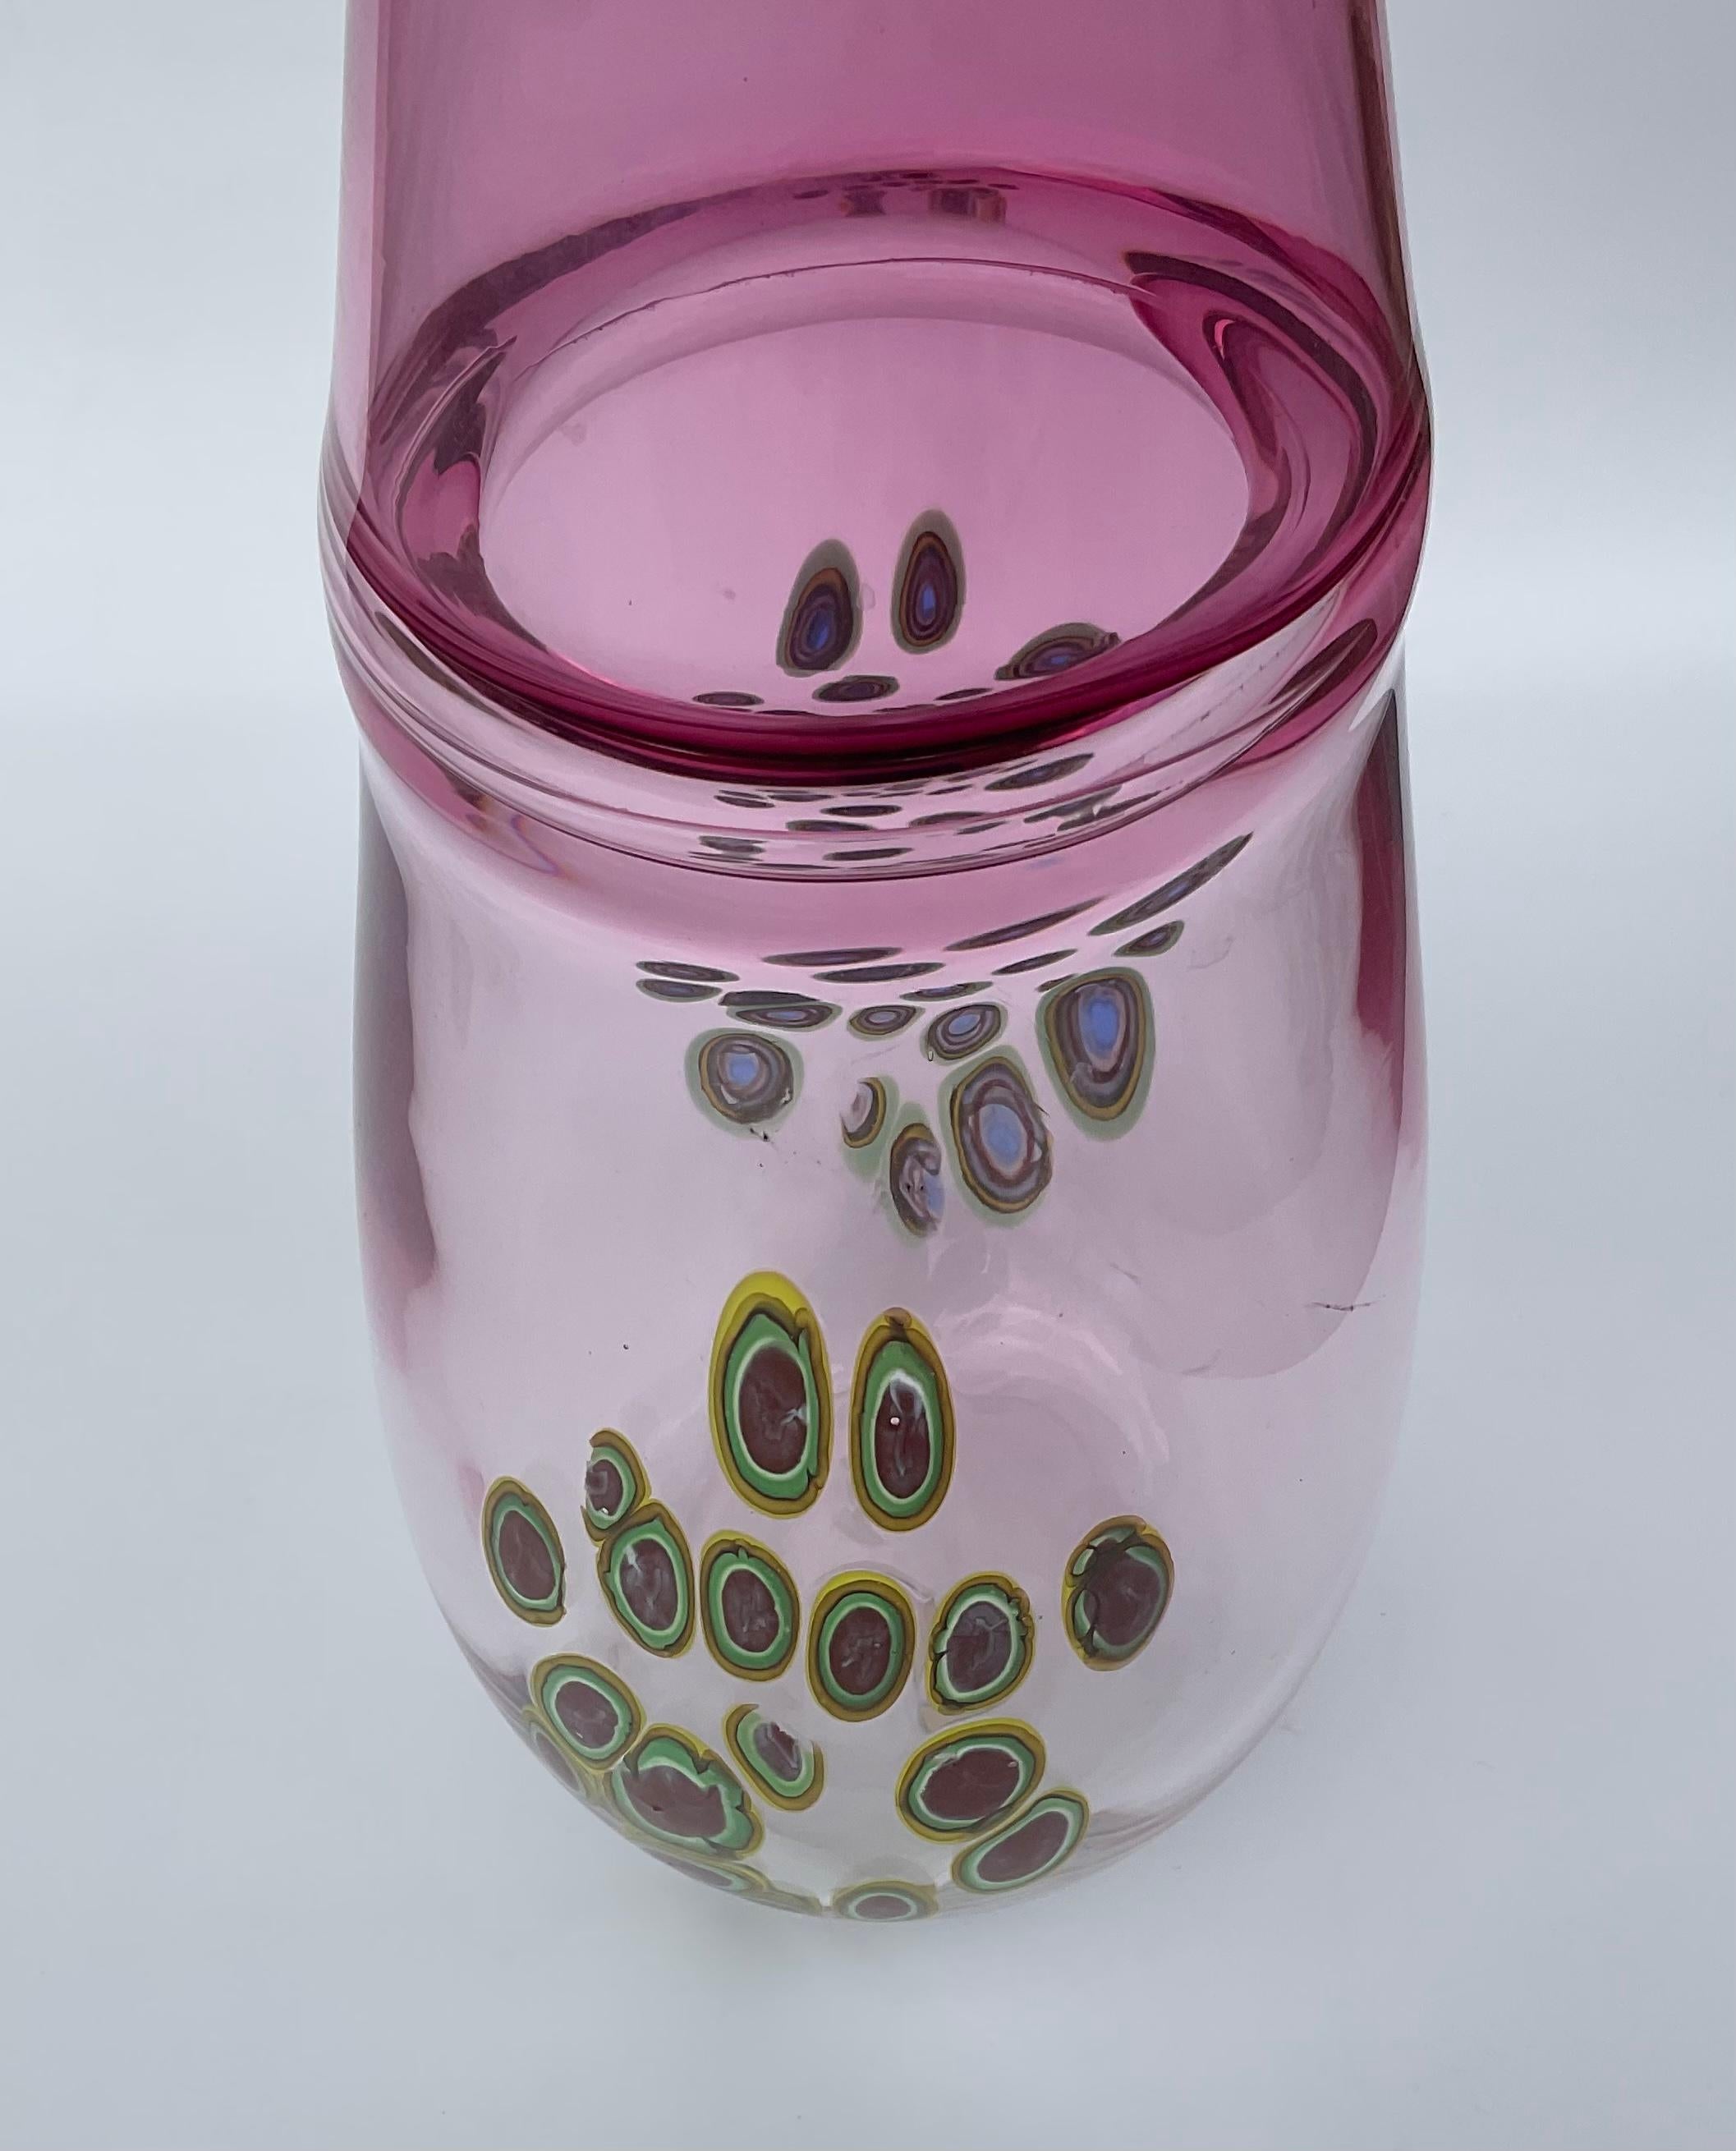 Incalmo Murrine Murano Glass Vase Attributed to Vistosi with Original Label In Good Condition For Sale In Ann Arbor, MI